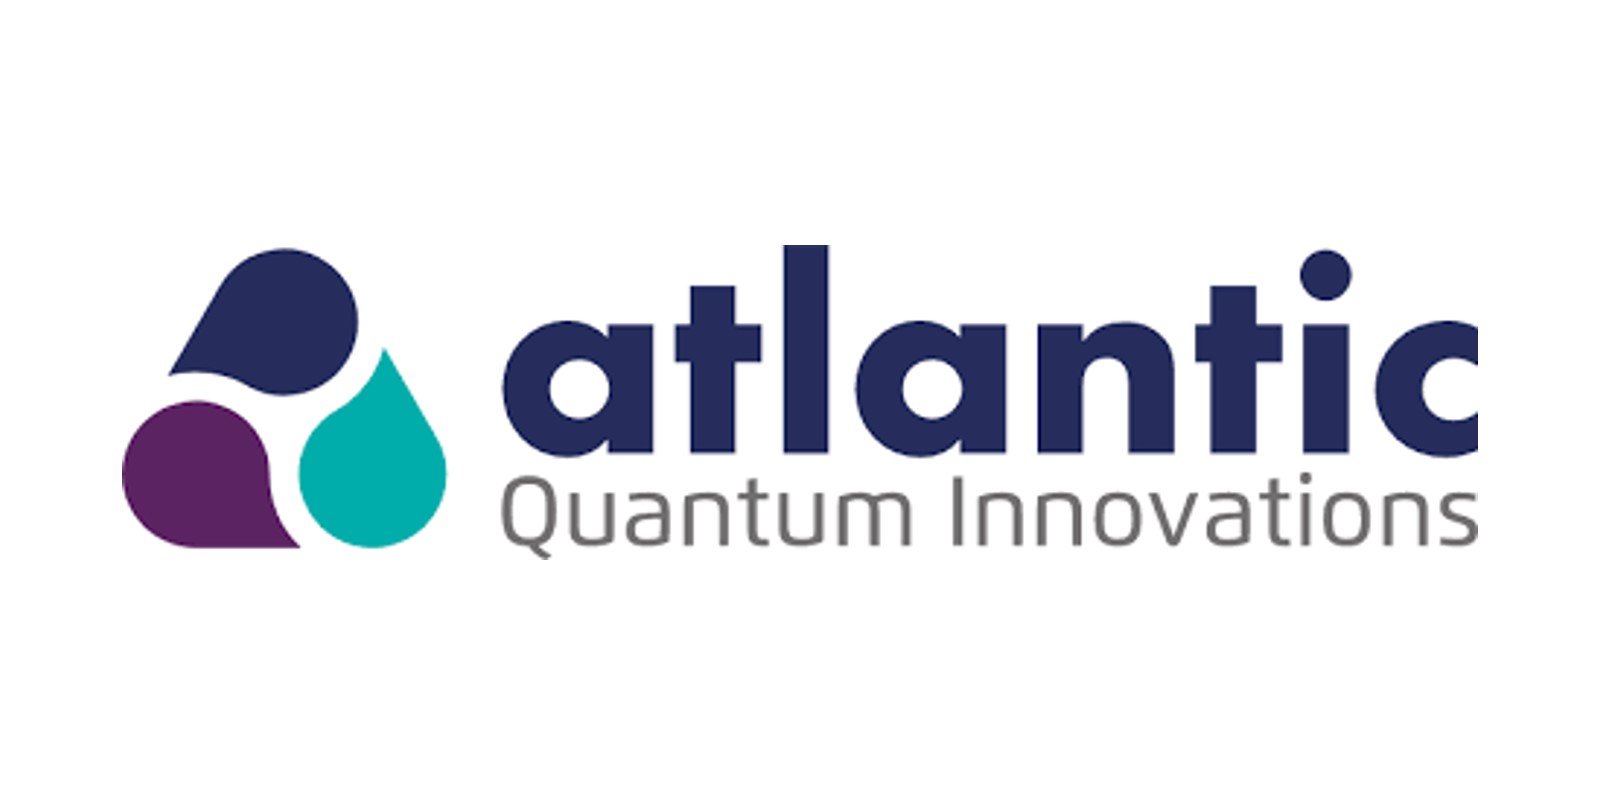 Atlantic Quantum Innovations logo.jpg